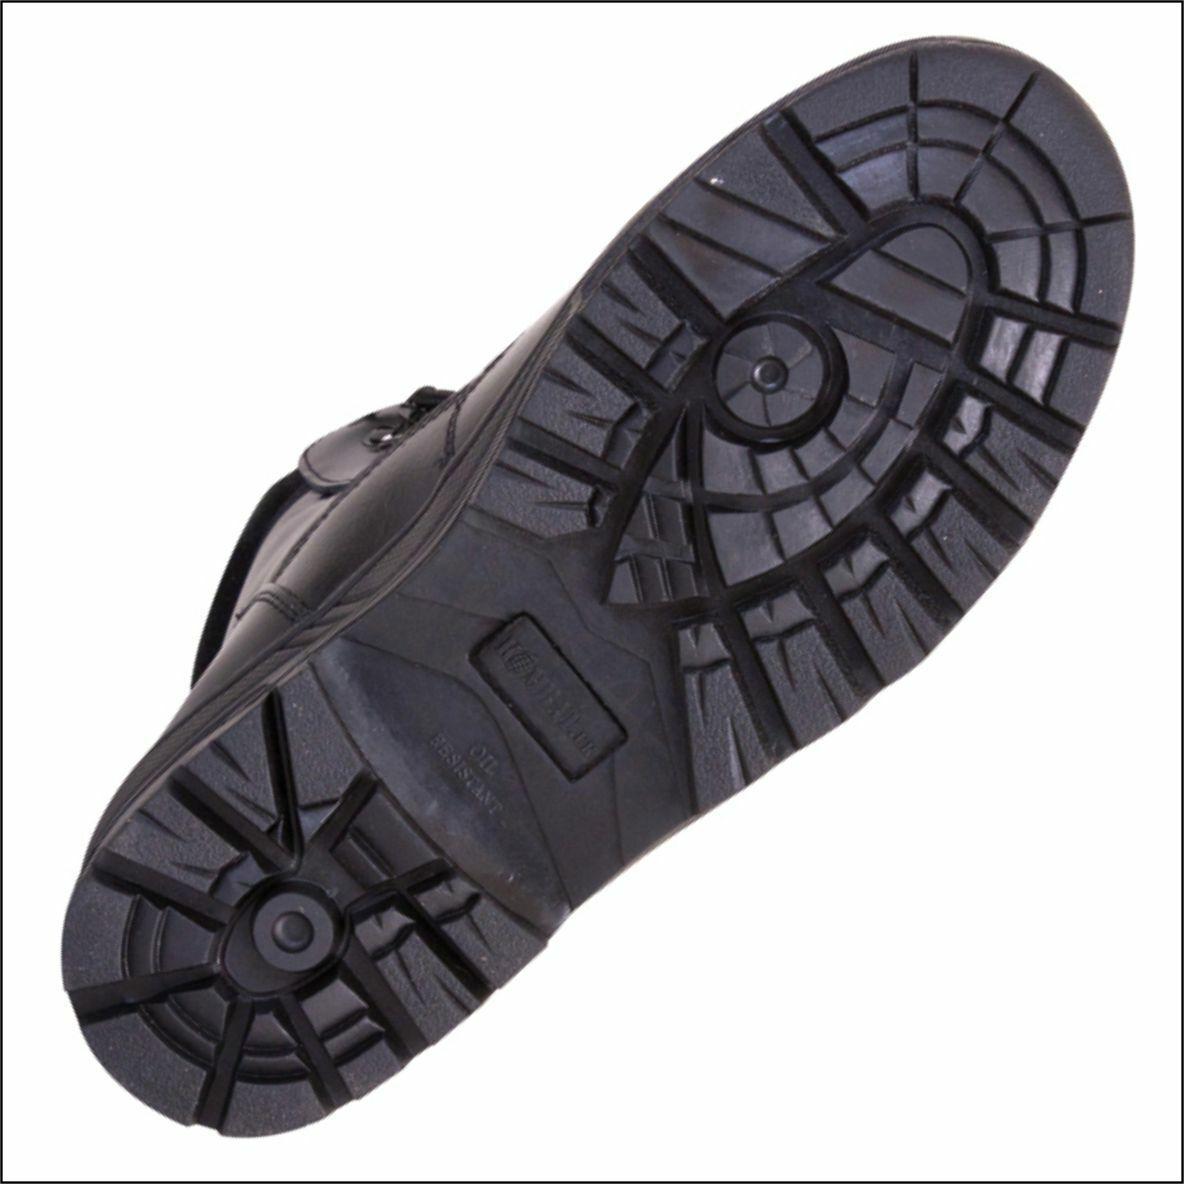 Kombat Patrol Boot - Half Leather Black